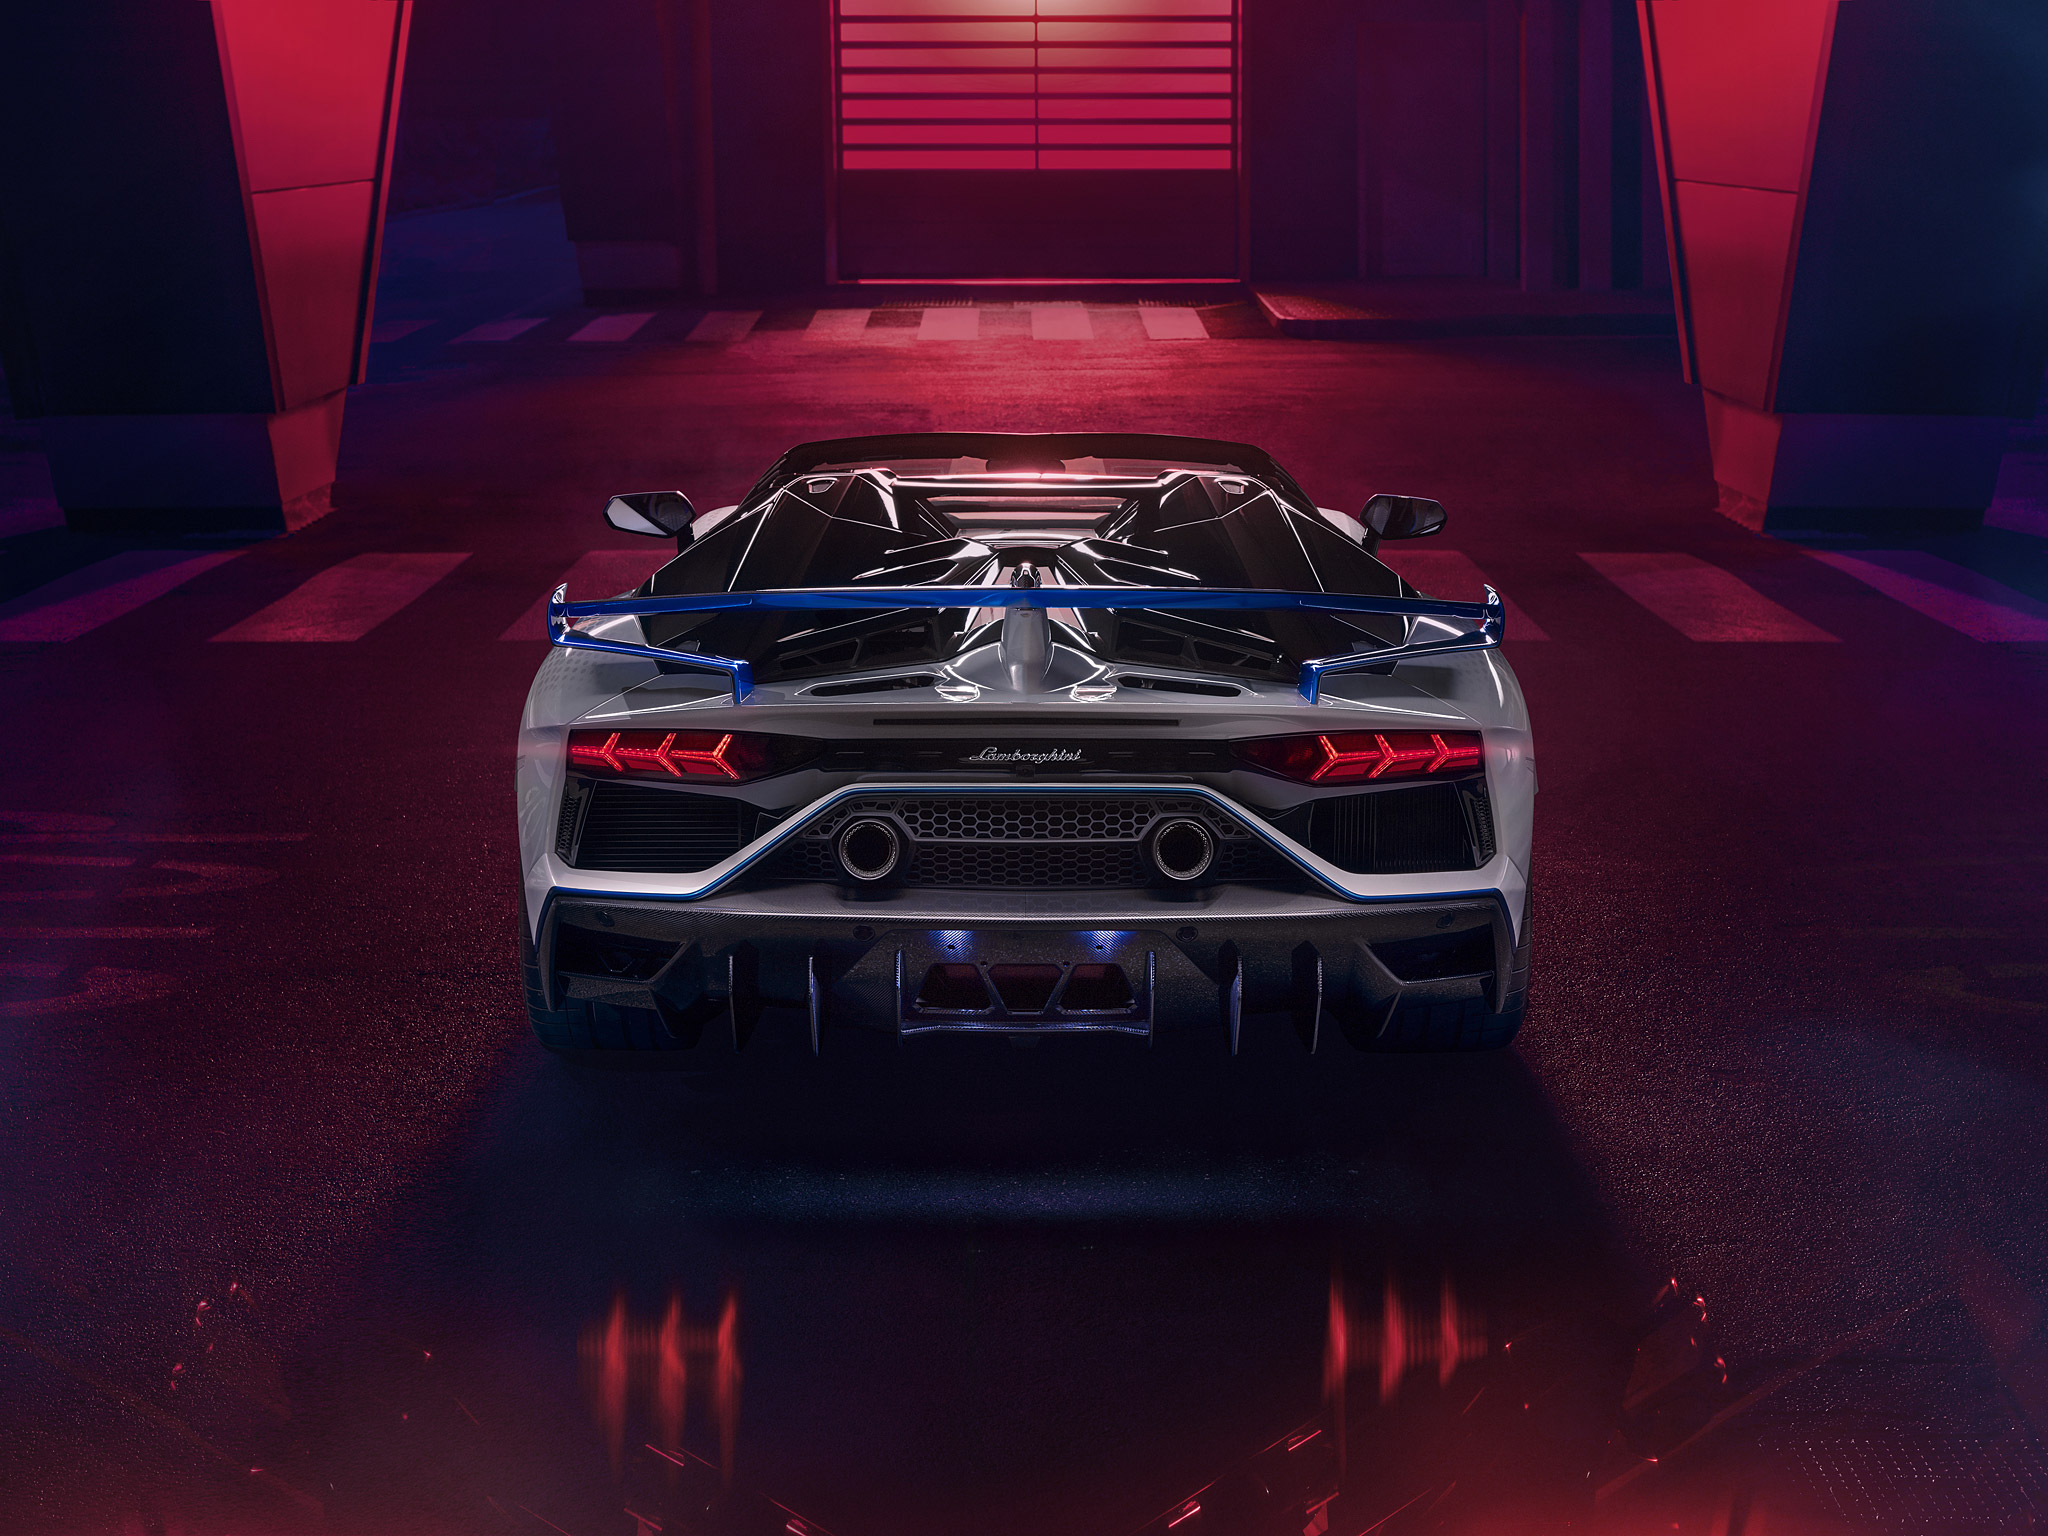  2020 Lamborghini Aventador SVJ Roadster Xago Edition Wallpaper.